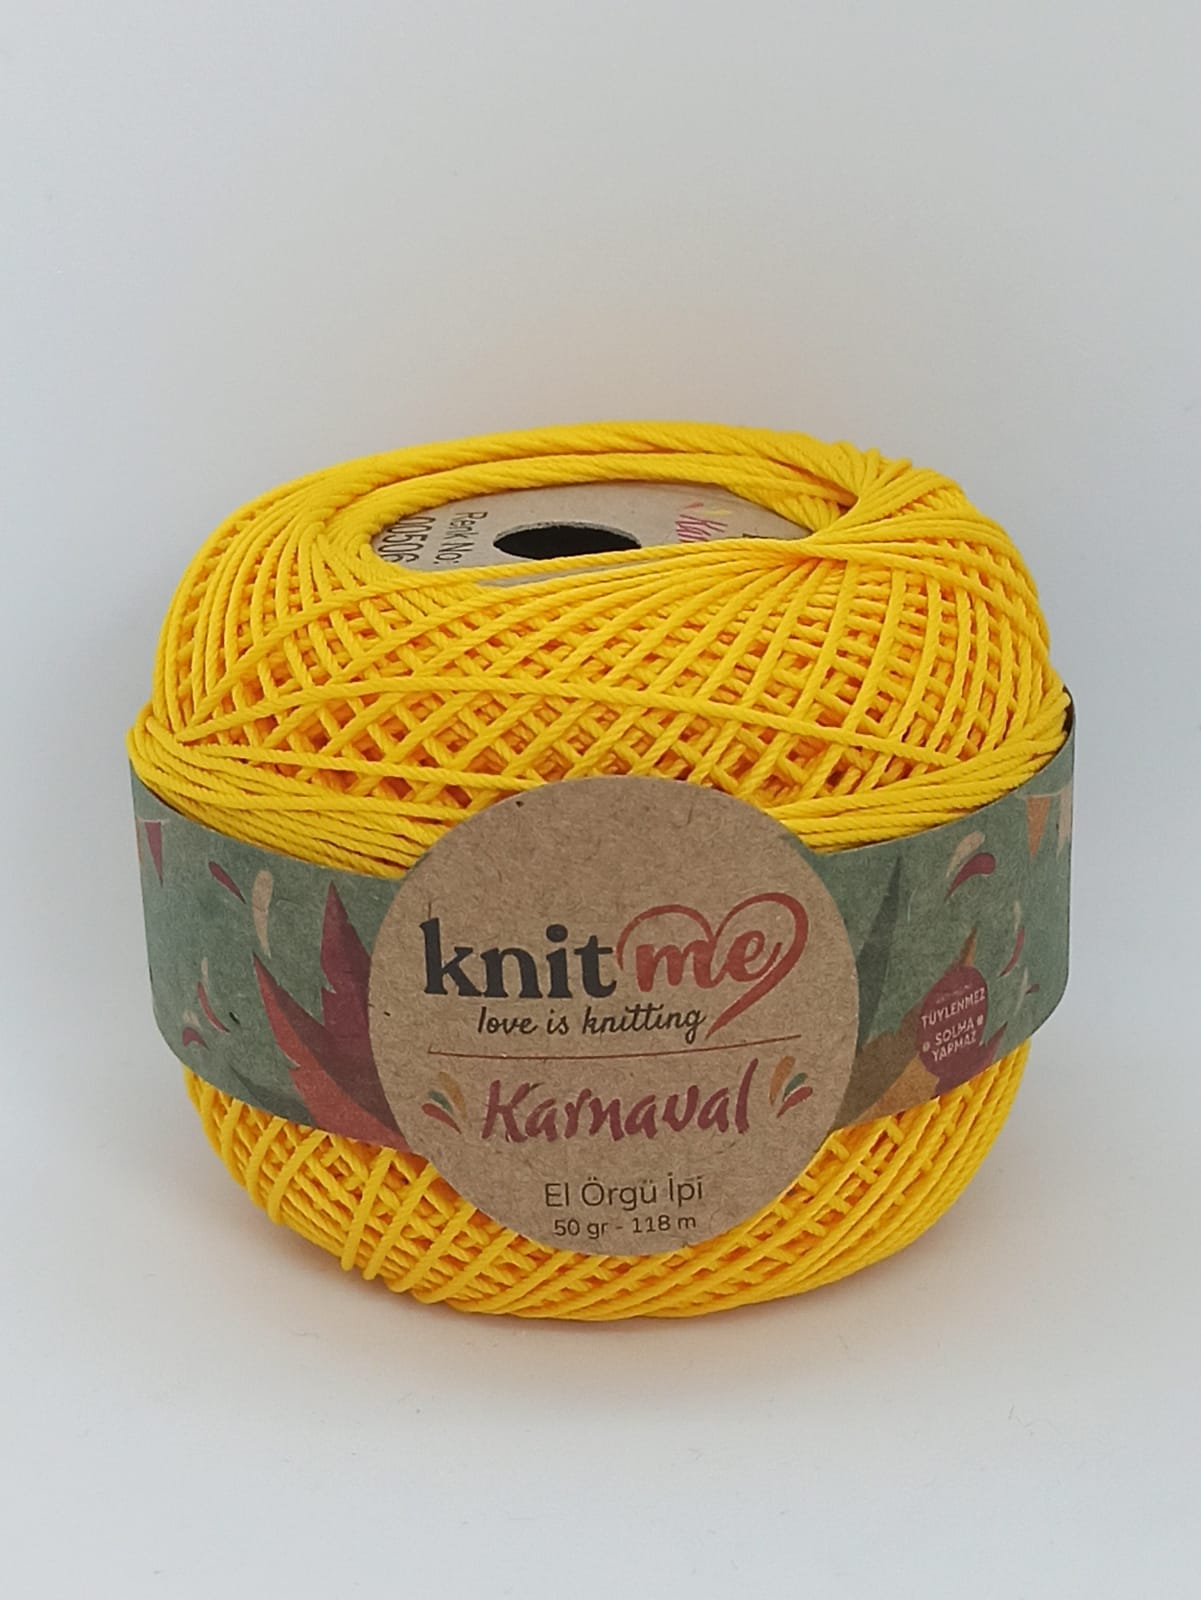 Knit Me Karnaval 00506